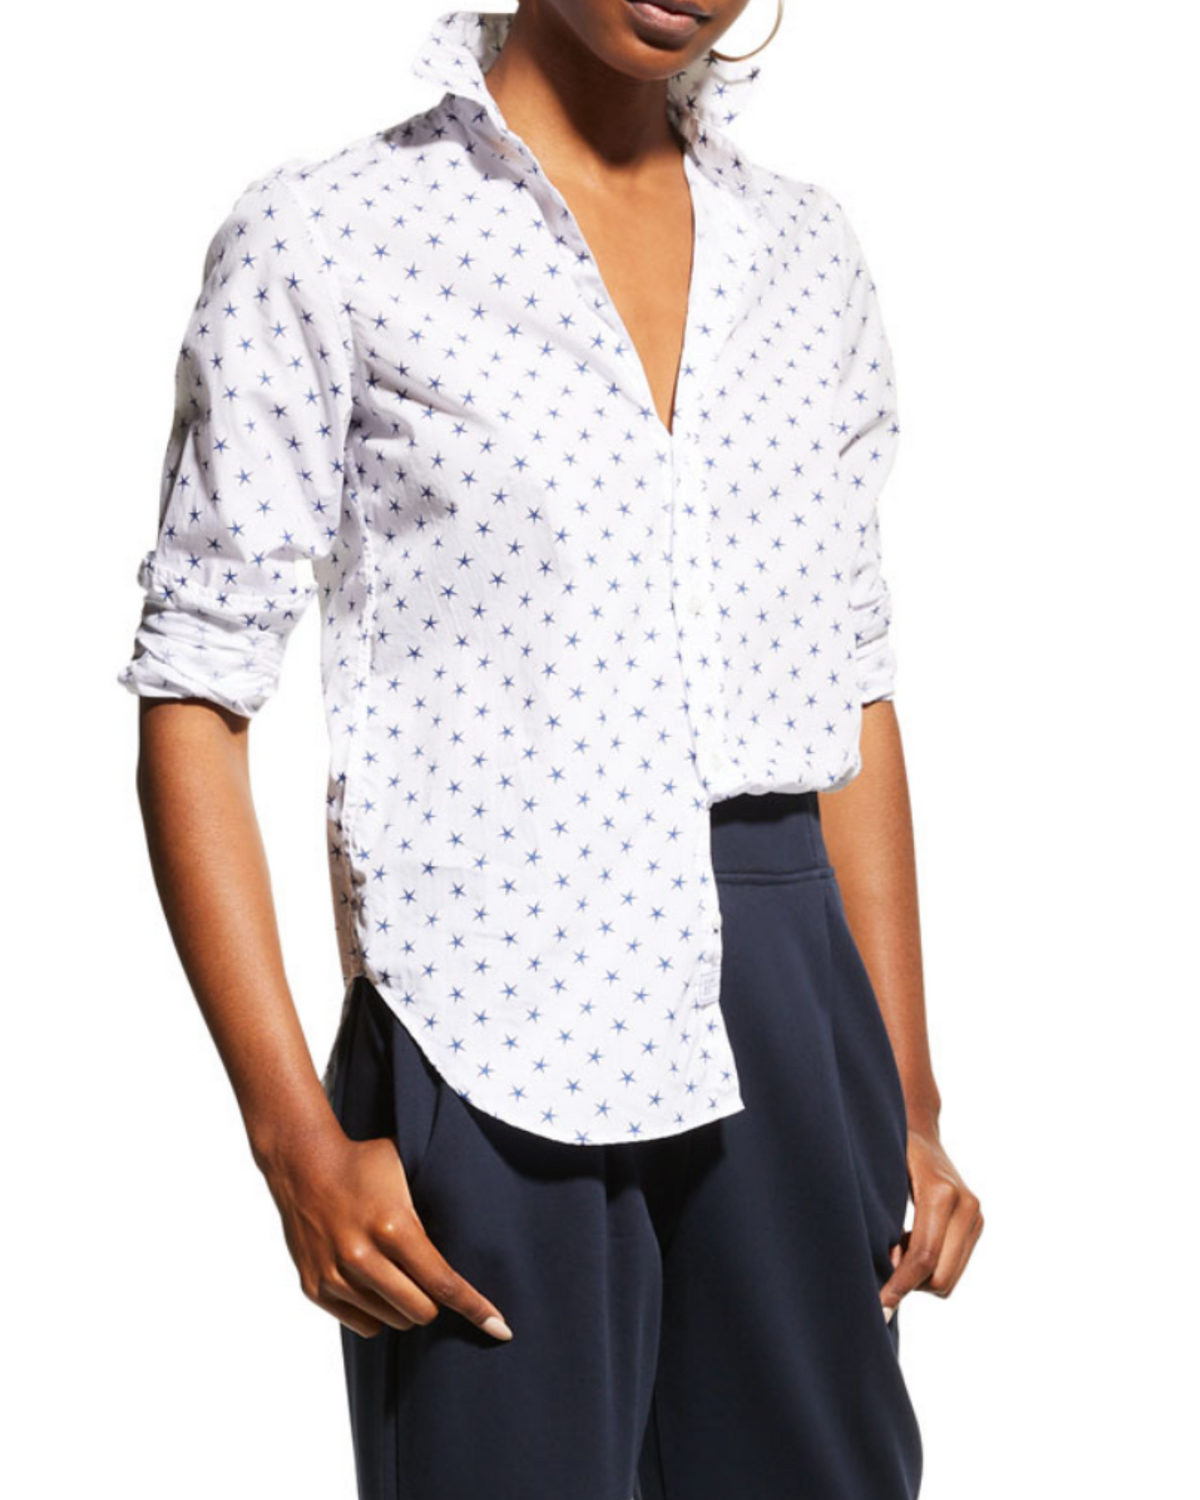 Frank Woven Button-Up Shirt - AshleyCole Boutique